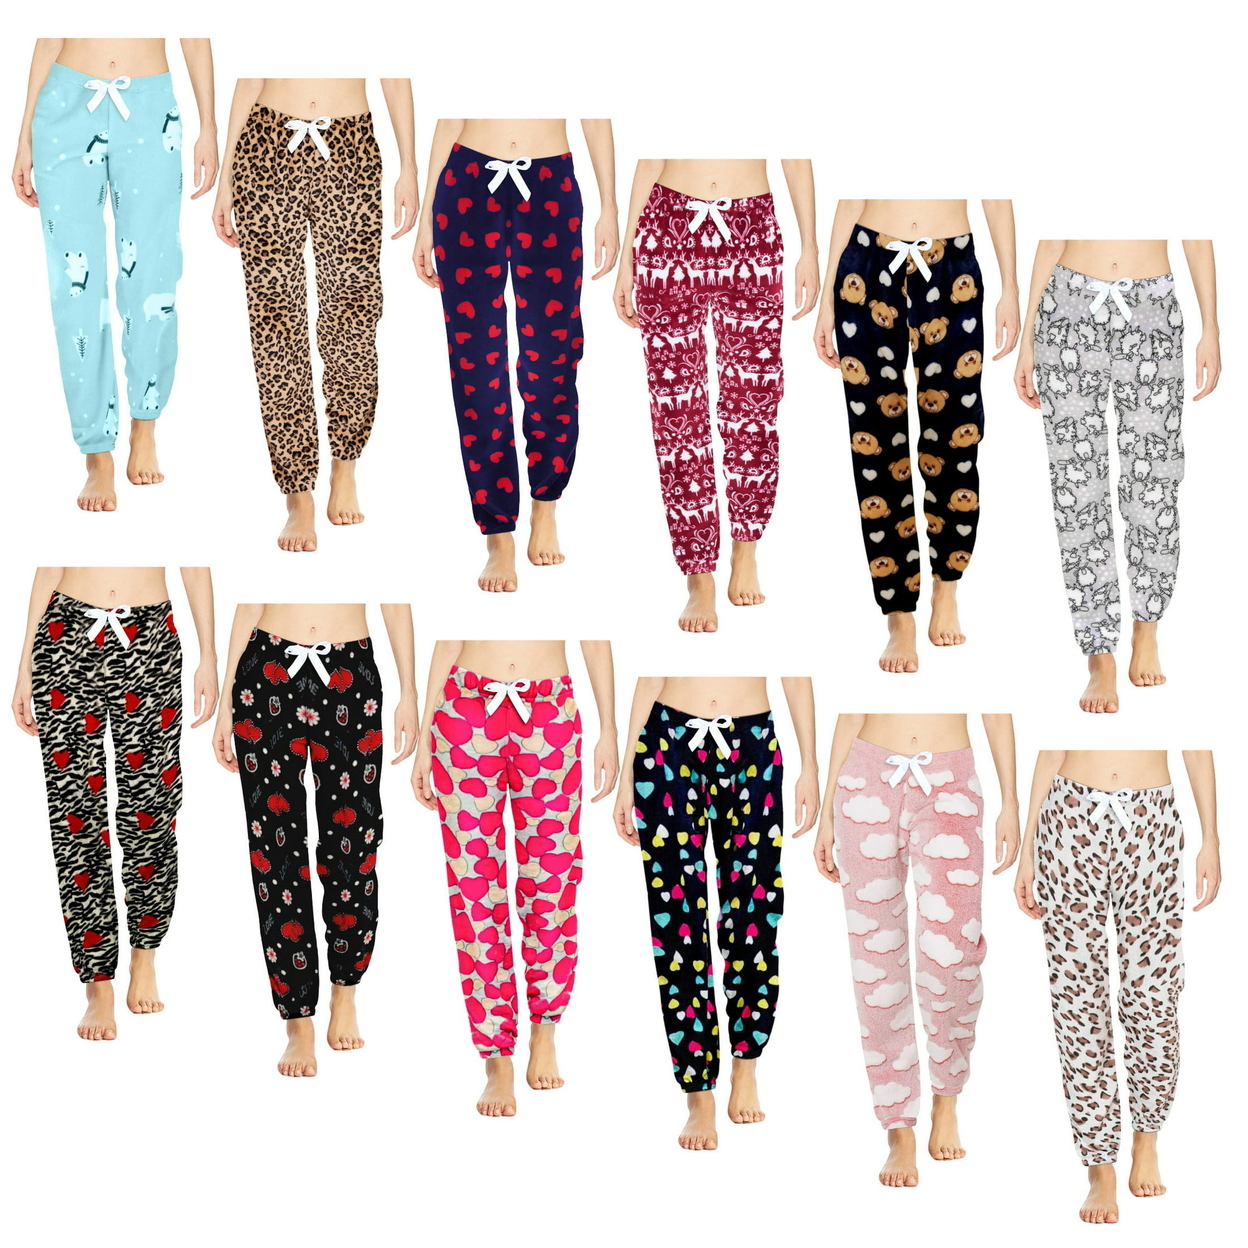 3-Pack: Women's Printed Ultra-Soft Comfy Stretch Micro-Fleece Pajama Lounge Pants - Medium, Love